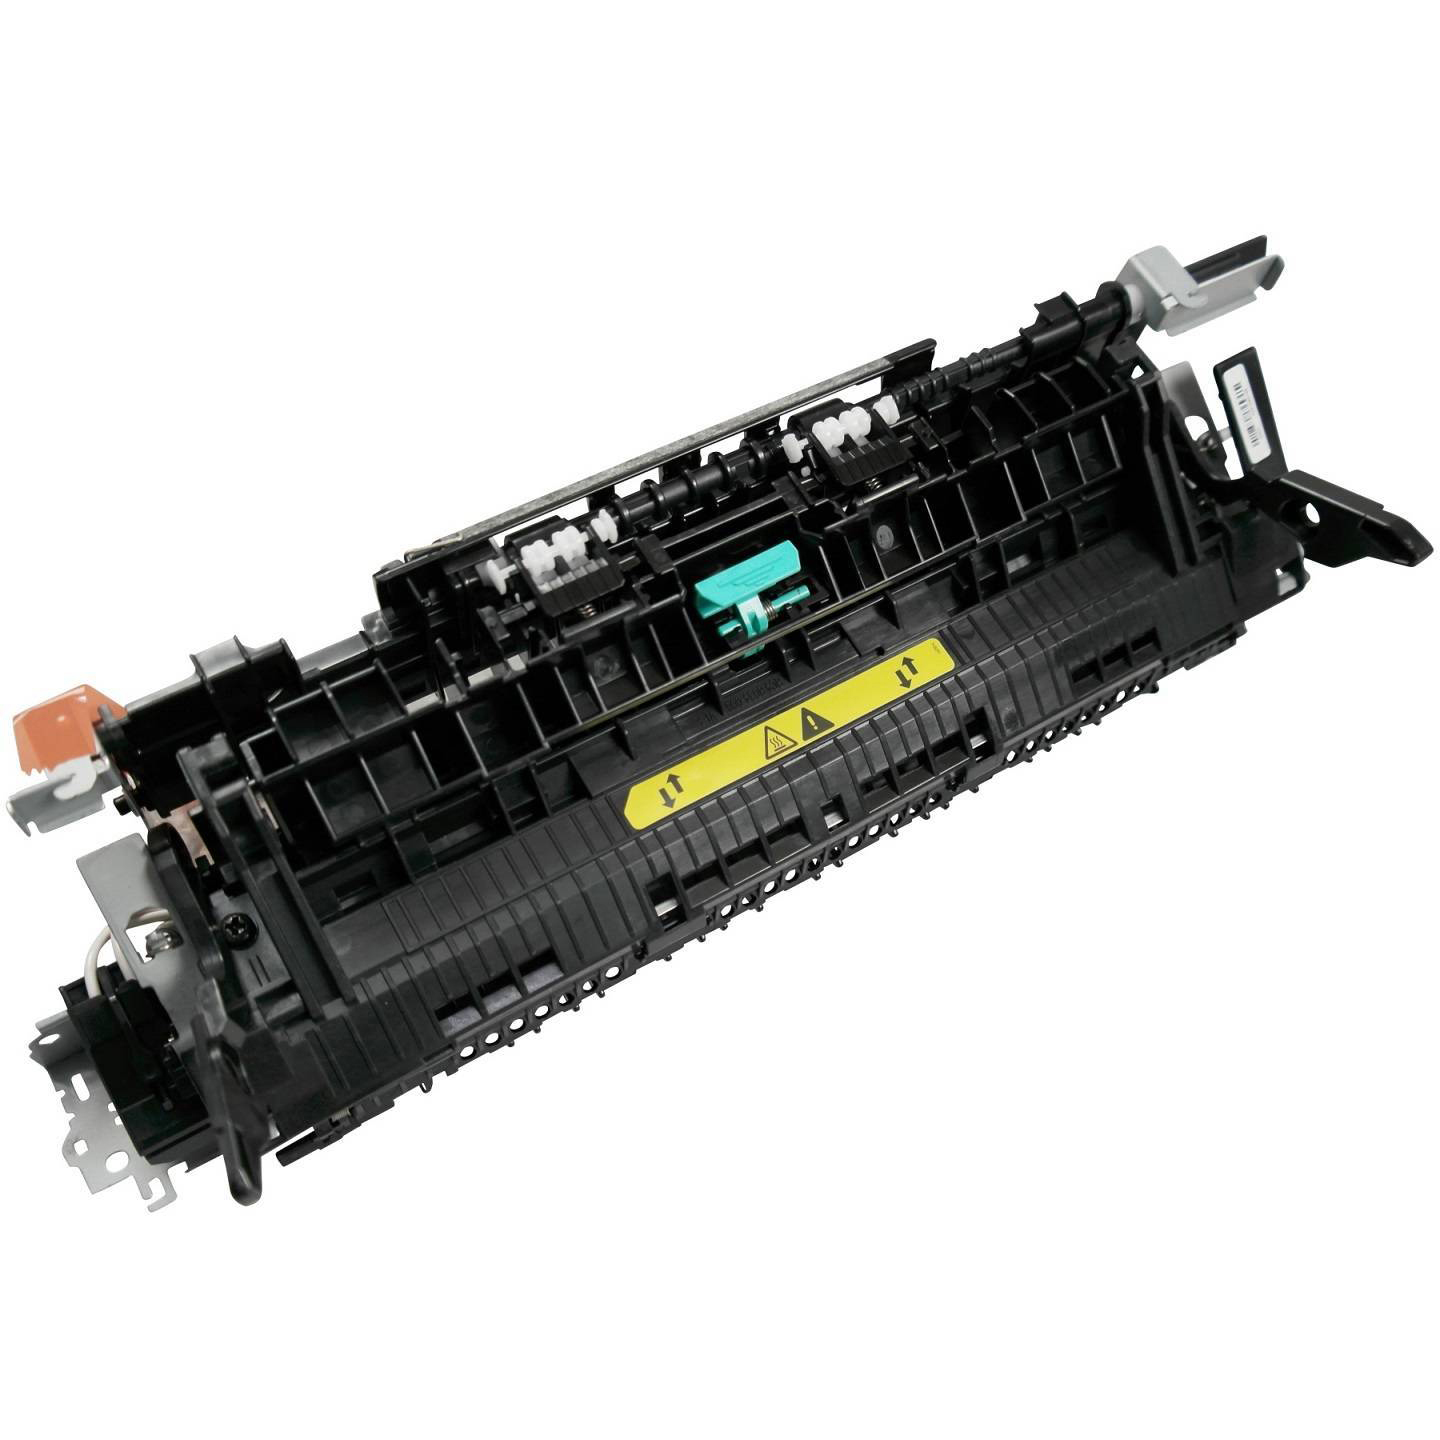 Original HP RM2-2233-000 Fixing Assembly (RM2-2233-000)